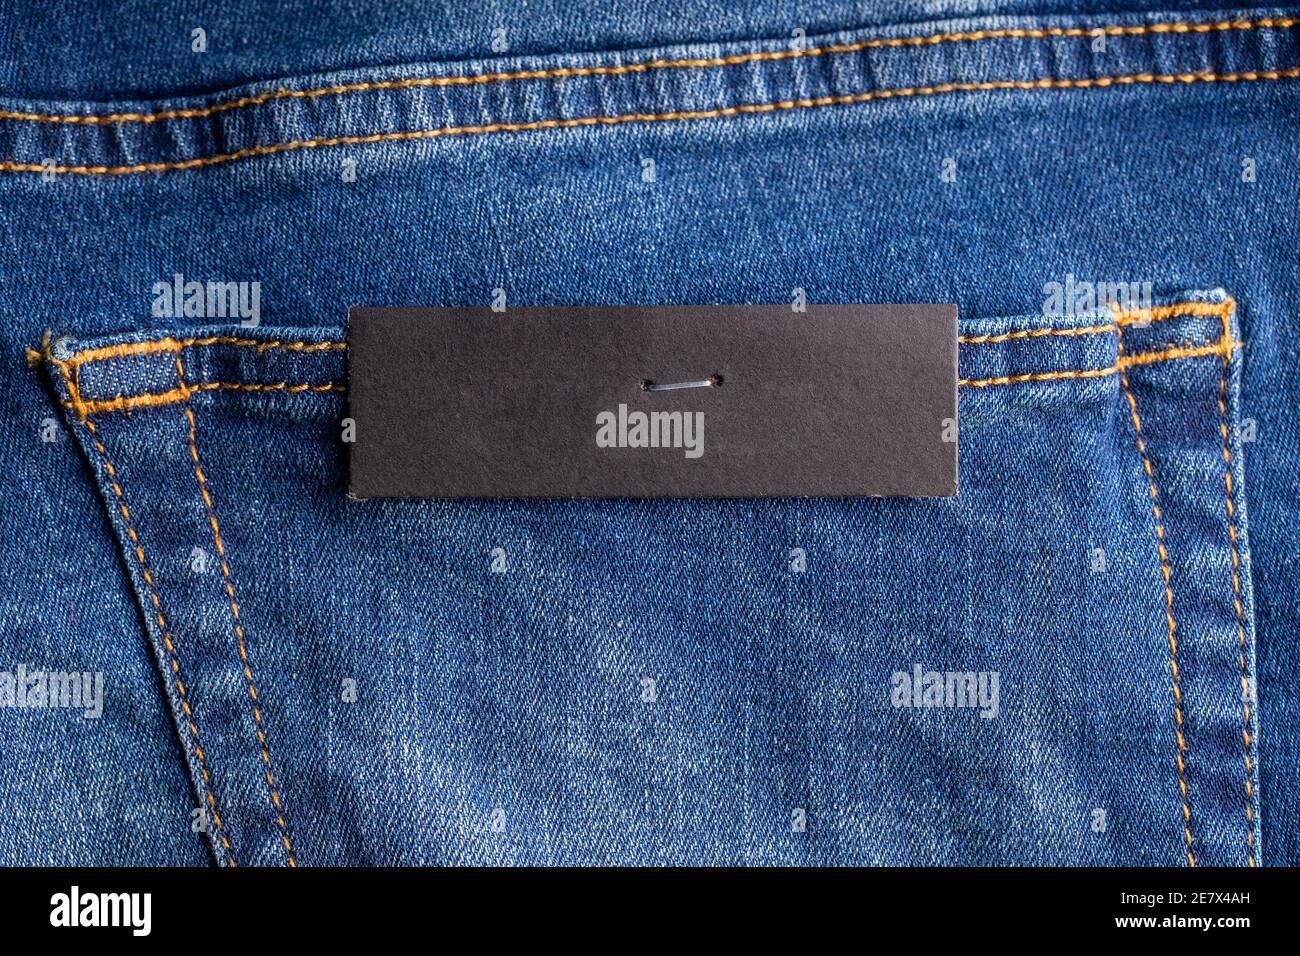 Denim jean back pocket hi-res stock photography and images - Alamy